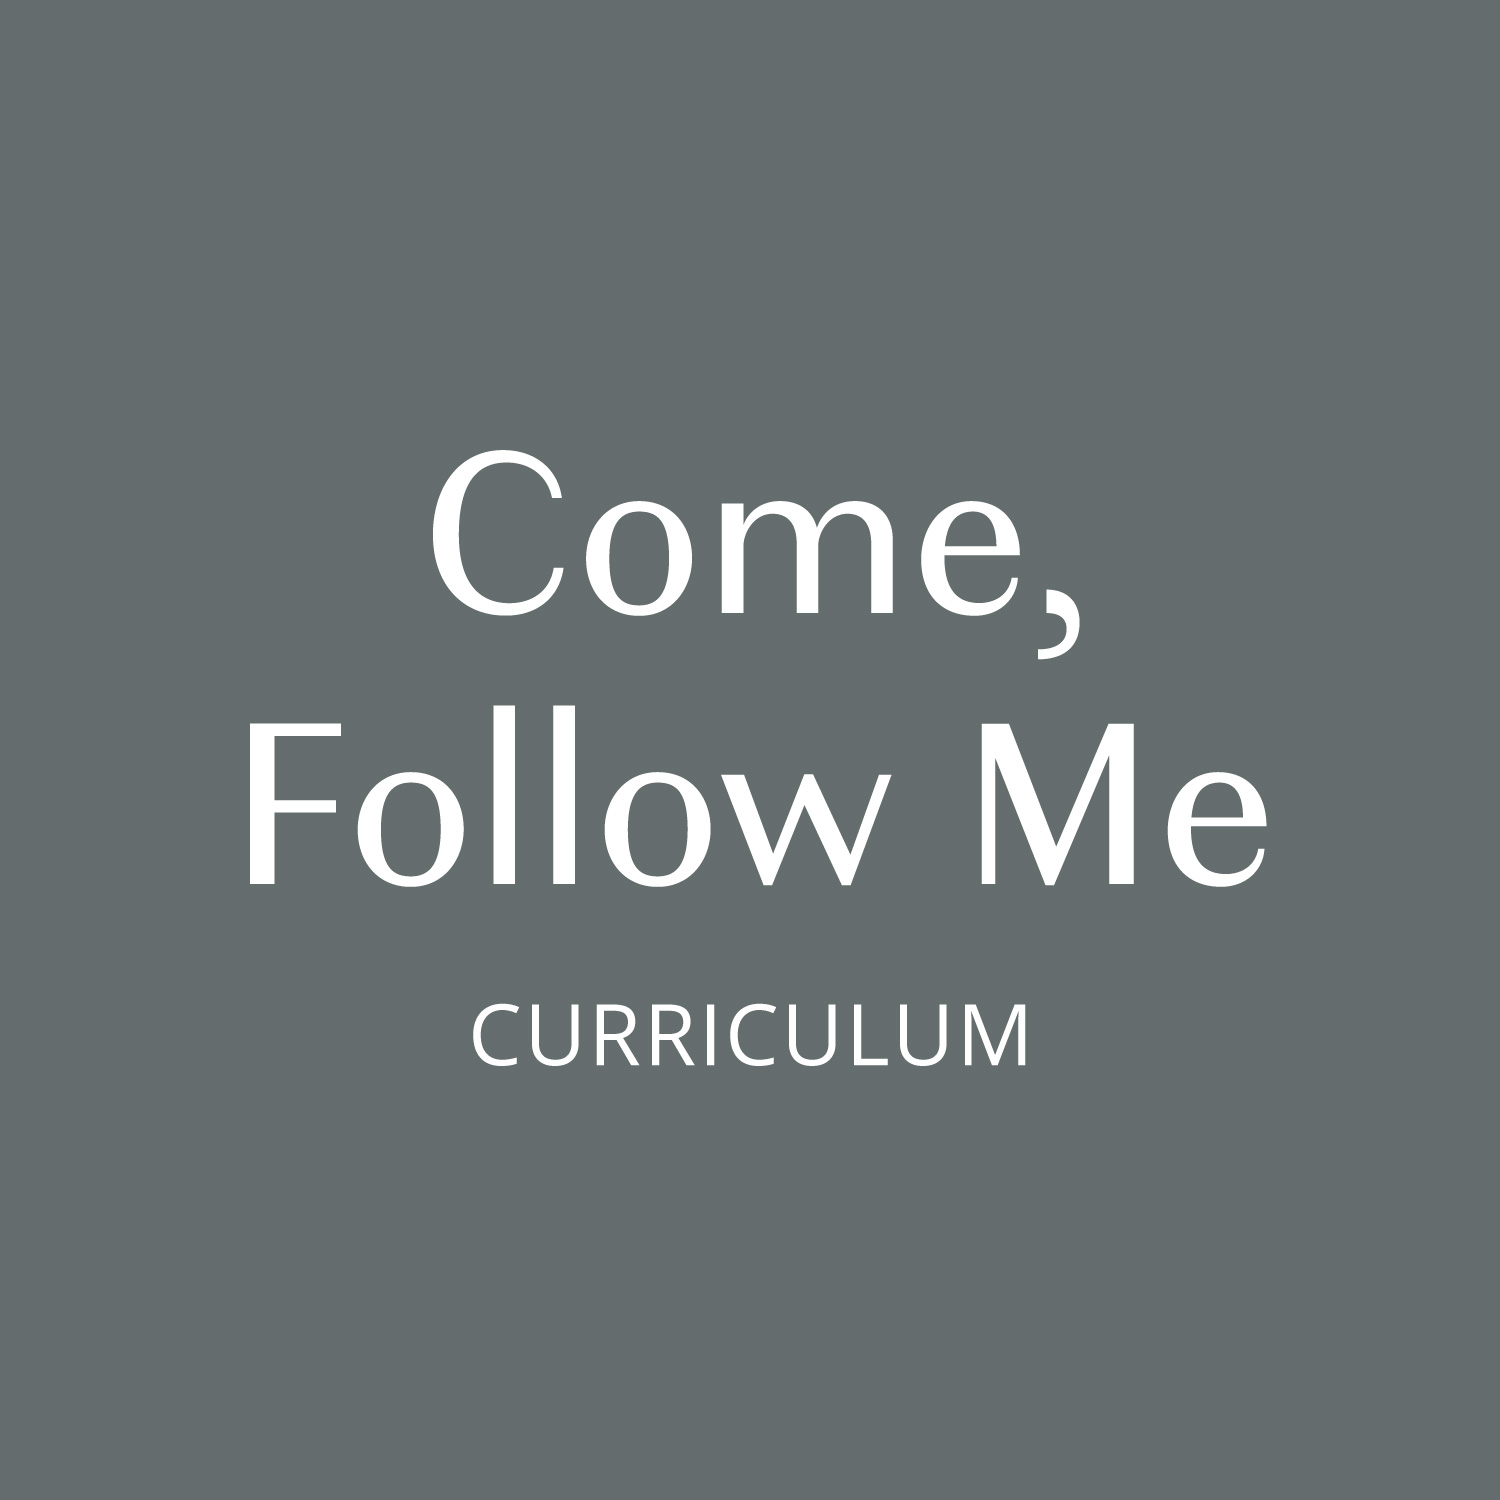 Come Follow Me Curriculum